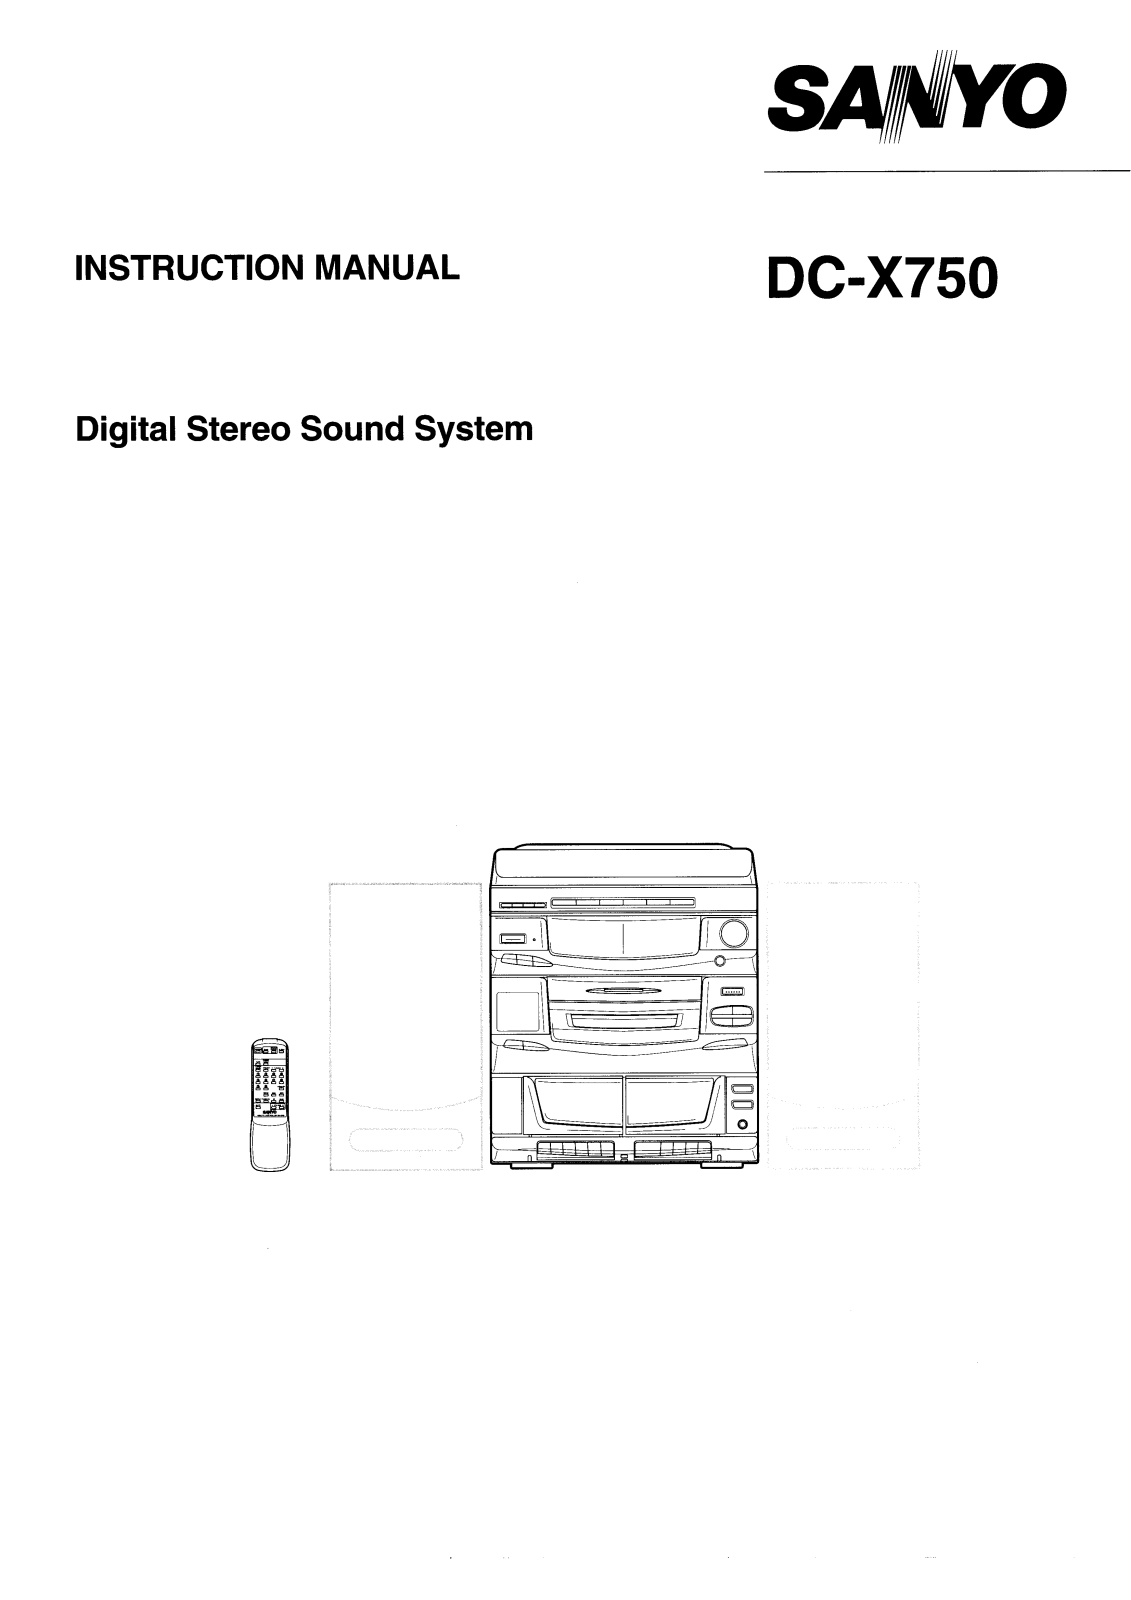 Sanyo DC-X750 Instruction Manual